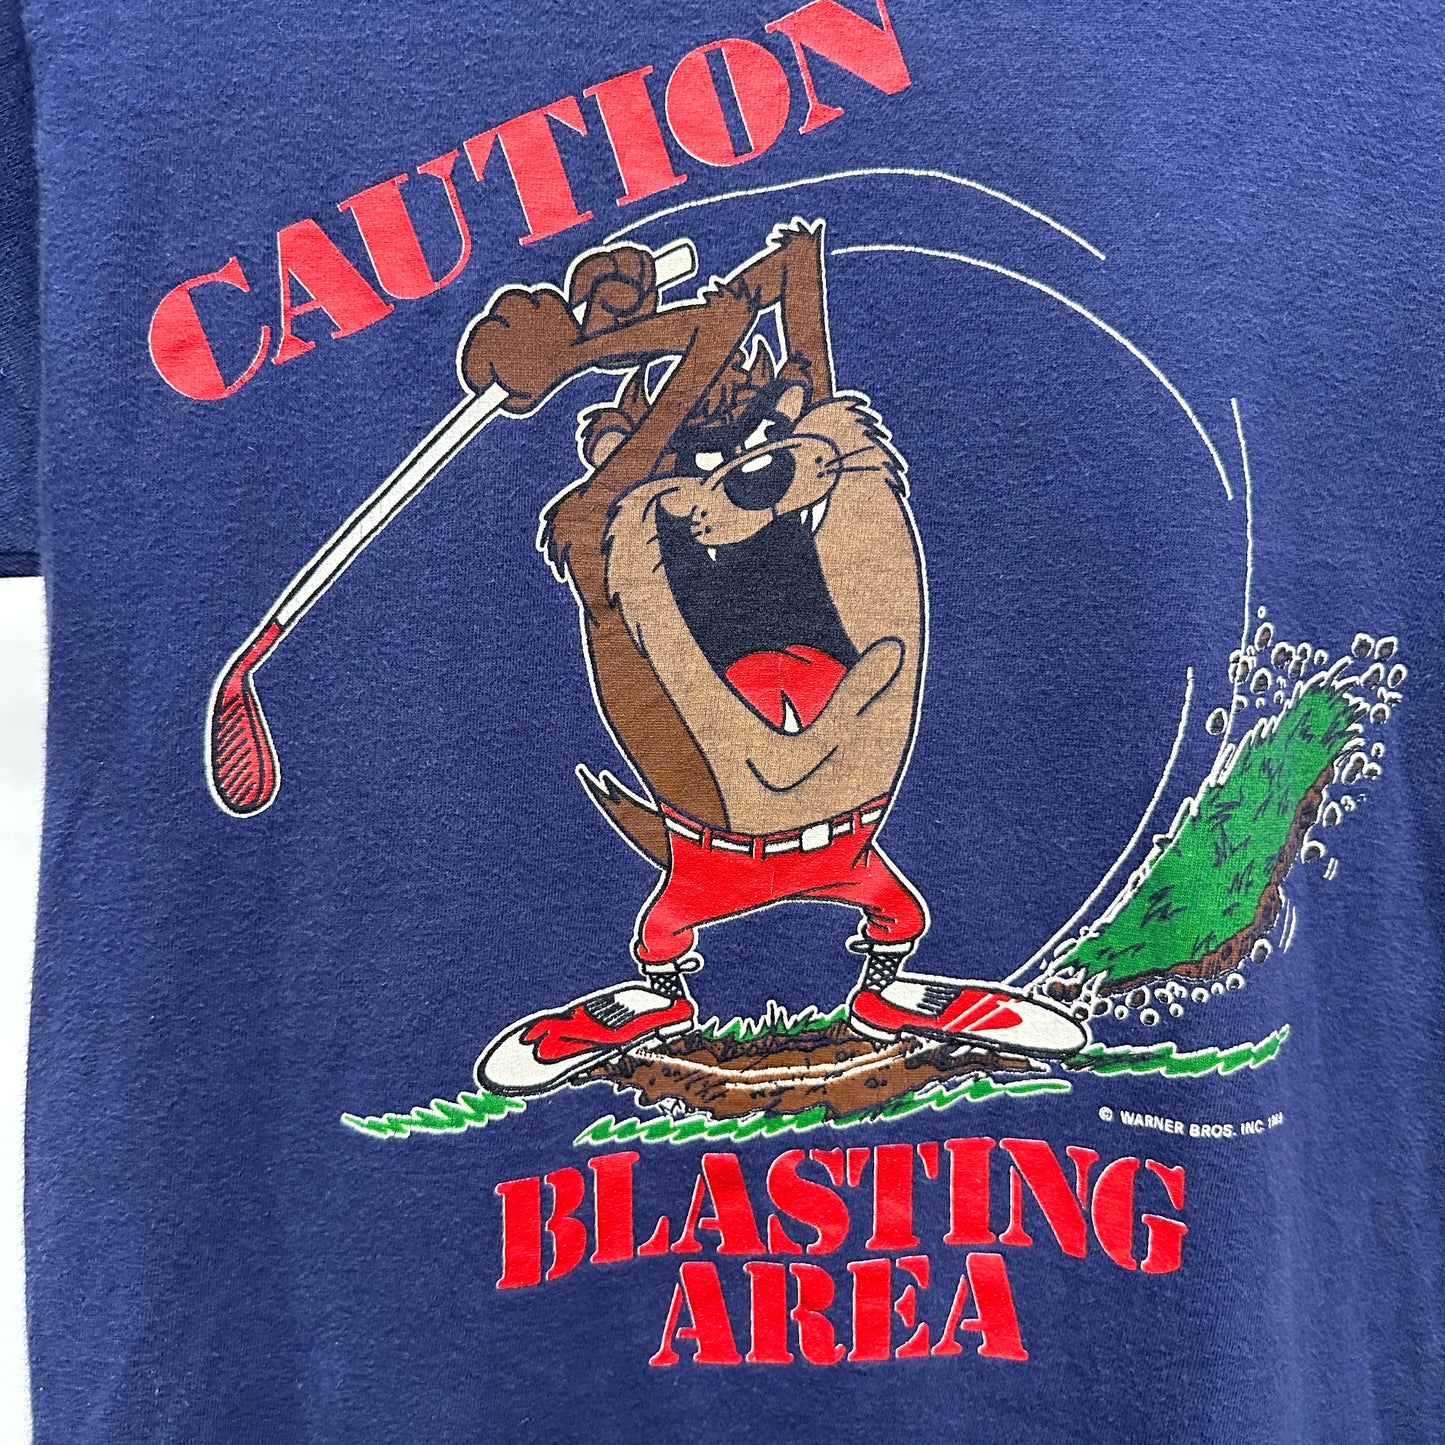 '89 Taz "Caution Blasting Area" Golf Navy Cartoon T-shirt sz S